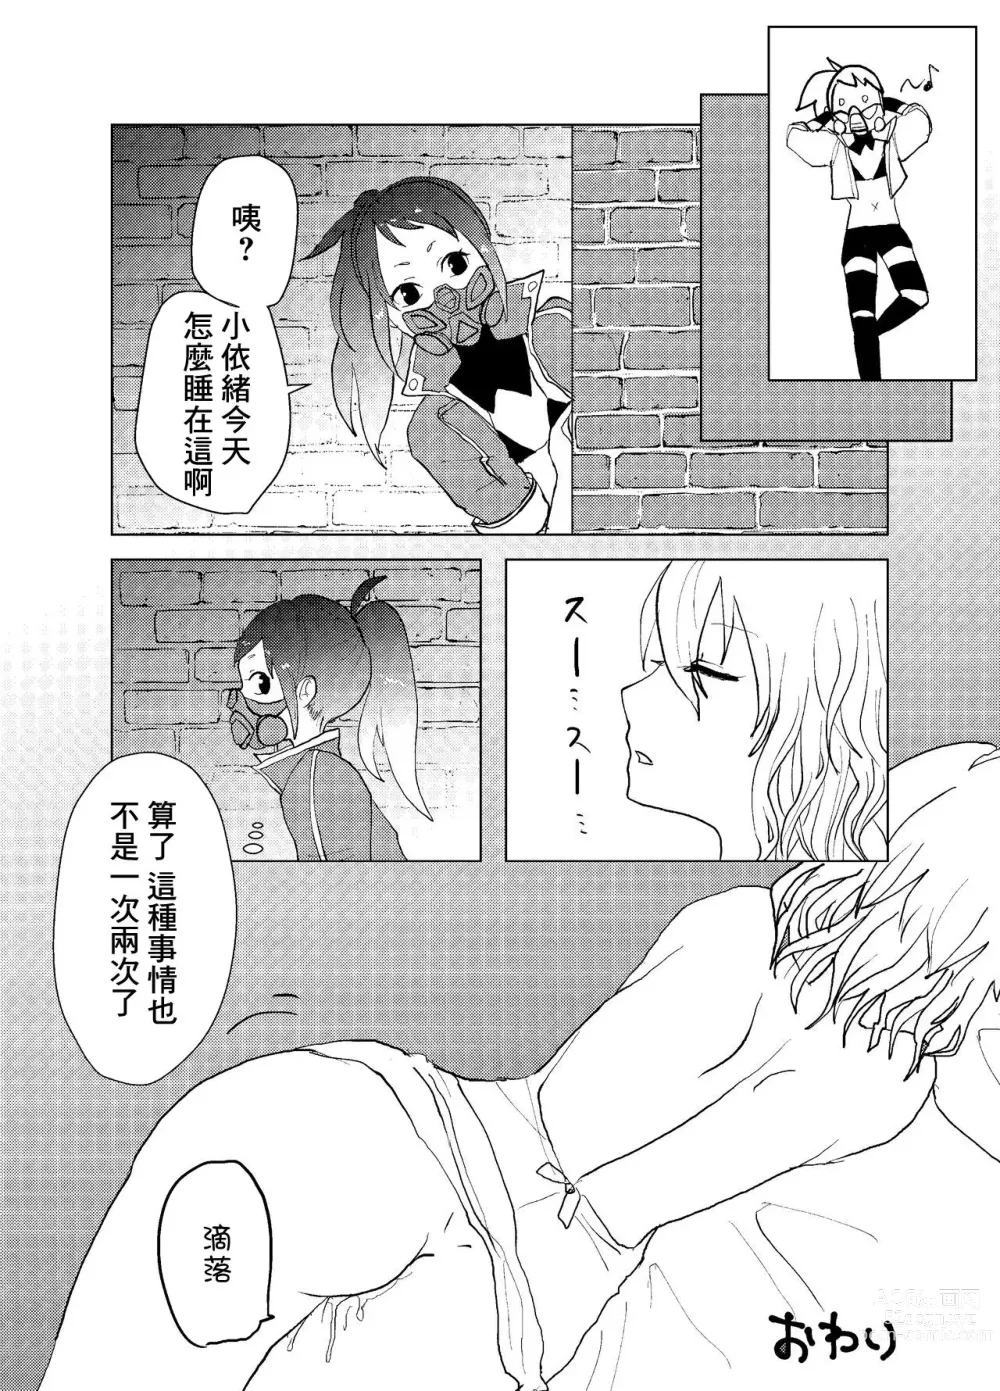 Page 13 of doujinshi 和小依緒光腿做愛